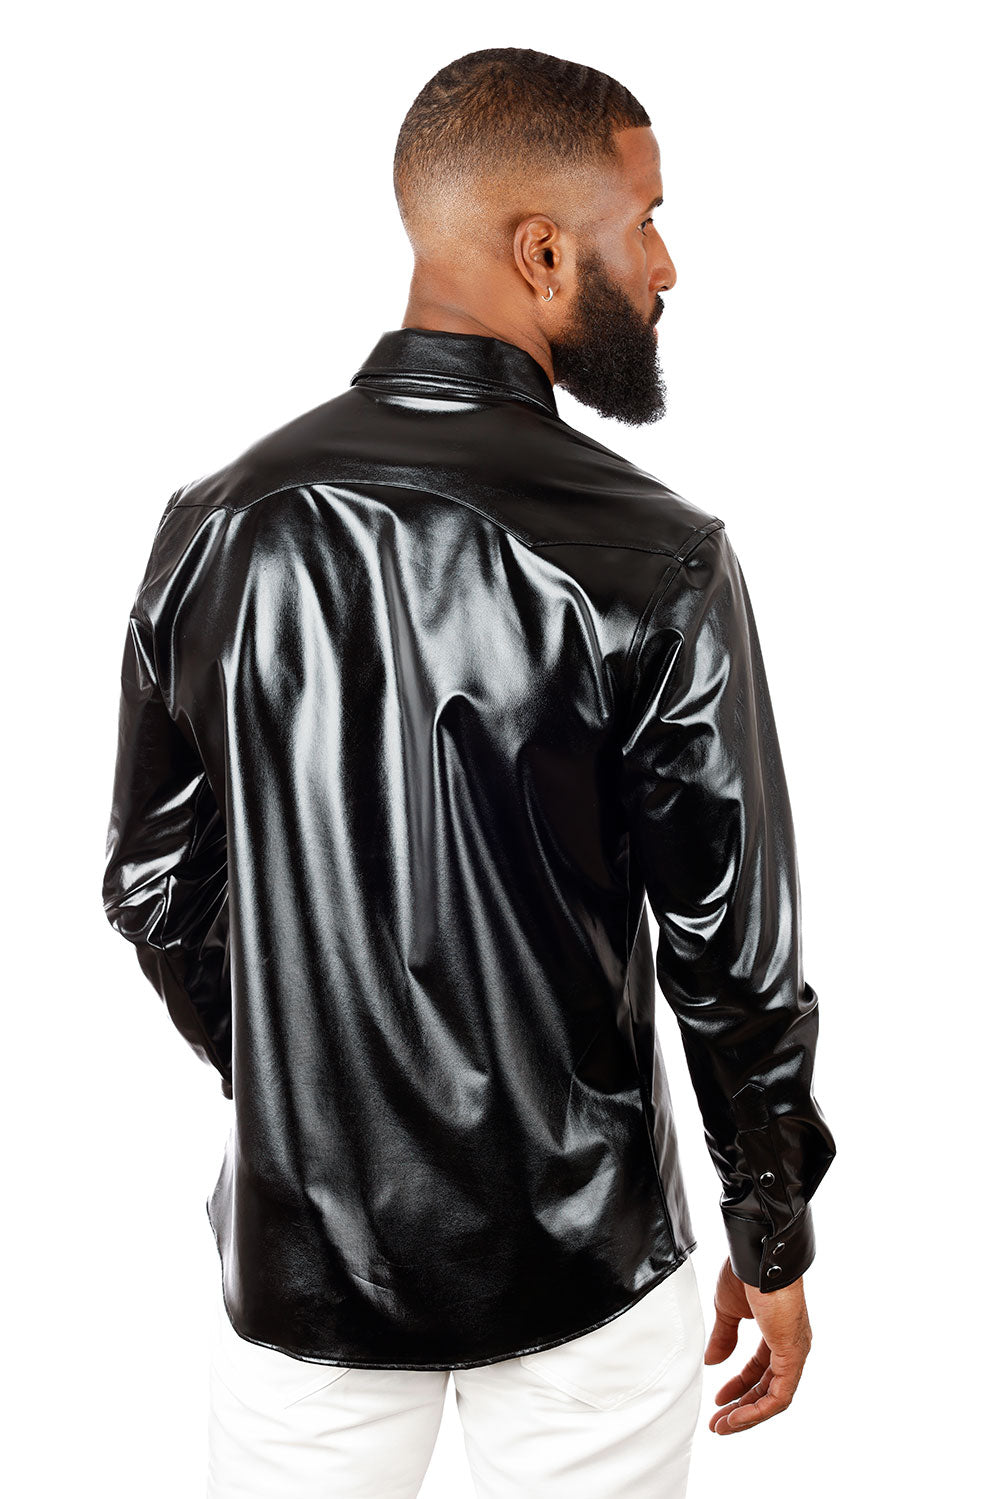 BARABAS Men's Shiny Metallic Stretch Long Sleeve Shirts 3B28 Black